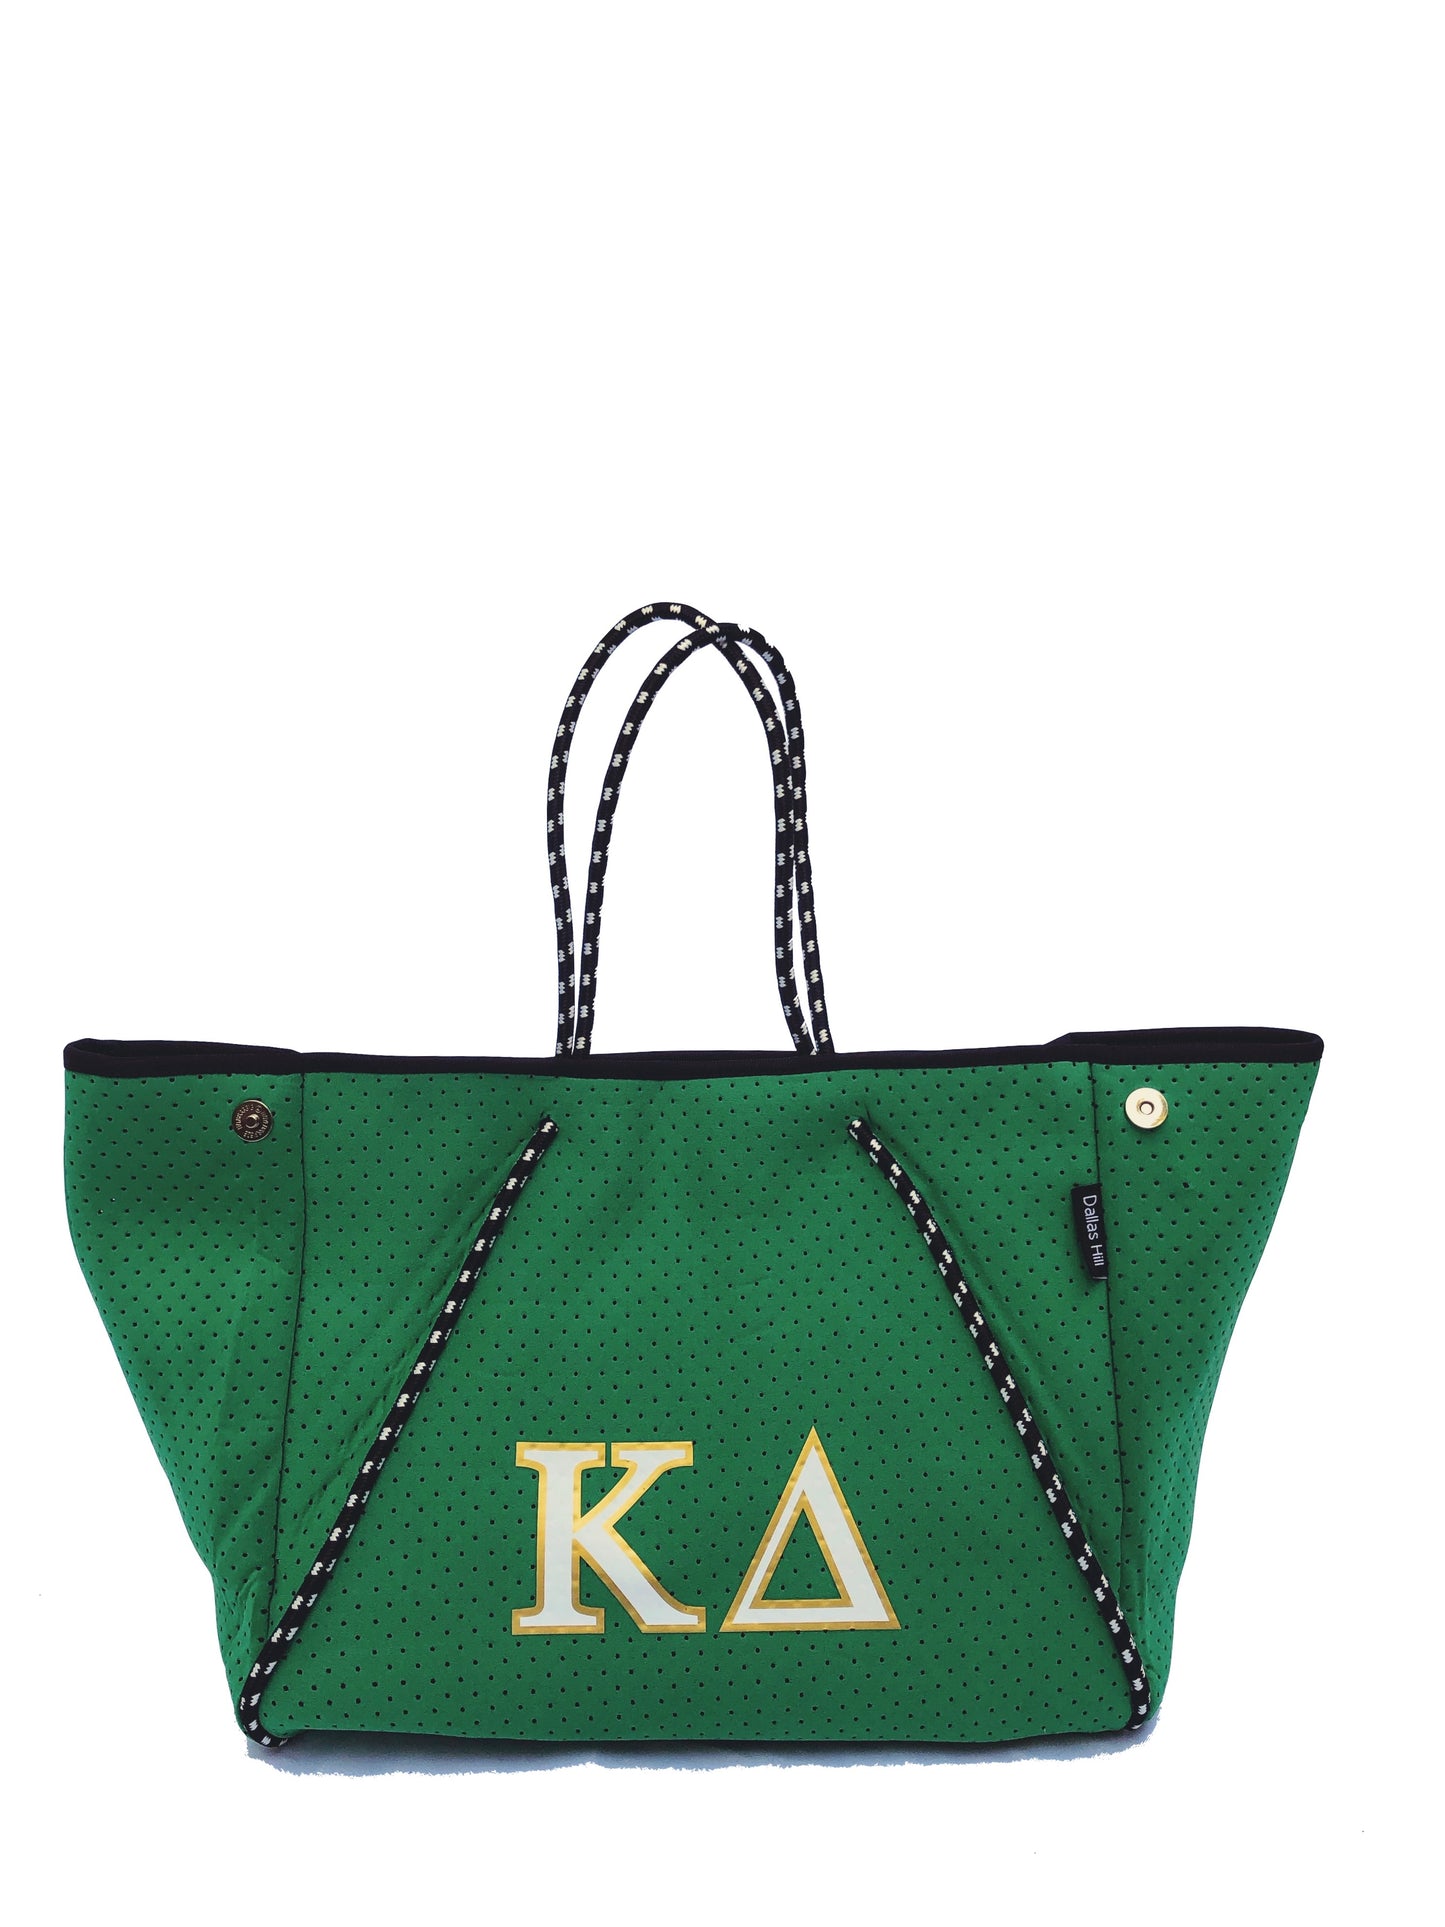 Kappa Delta KD Sorority Gift Bid Day Recruitment Neoprene Tote Bags School Overnight Gym Travel Beach Sister Dallas Hill